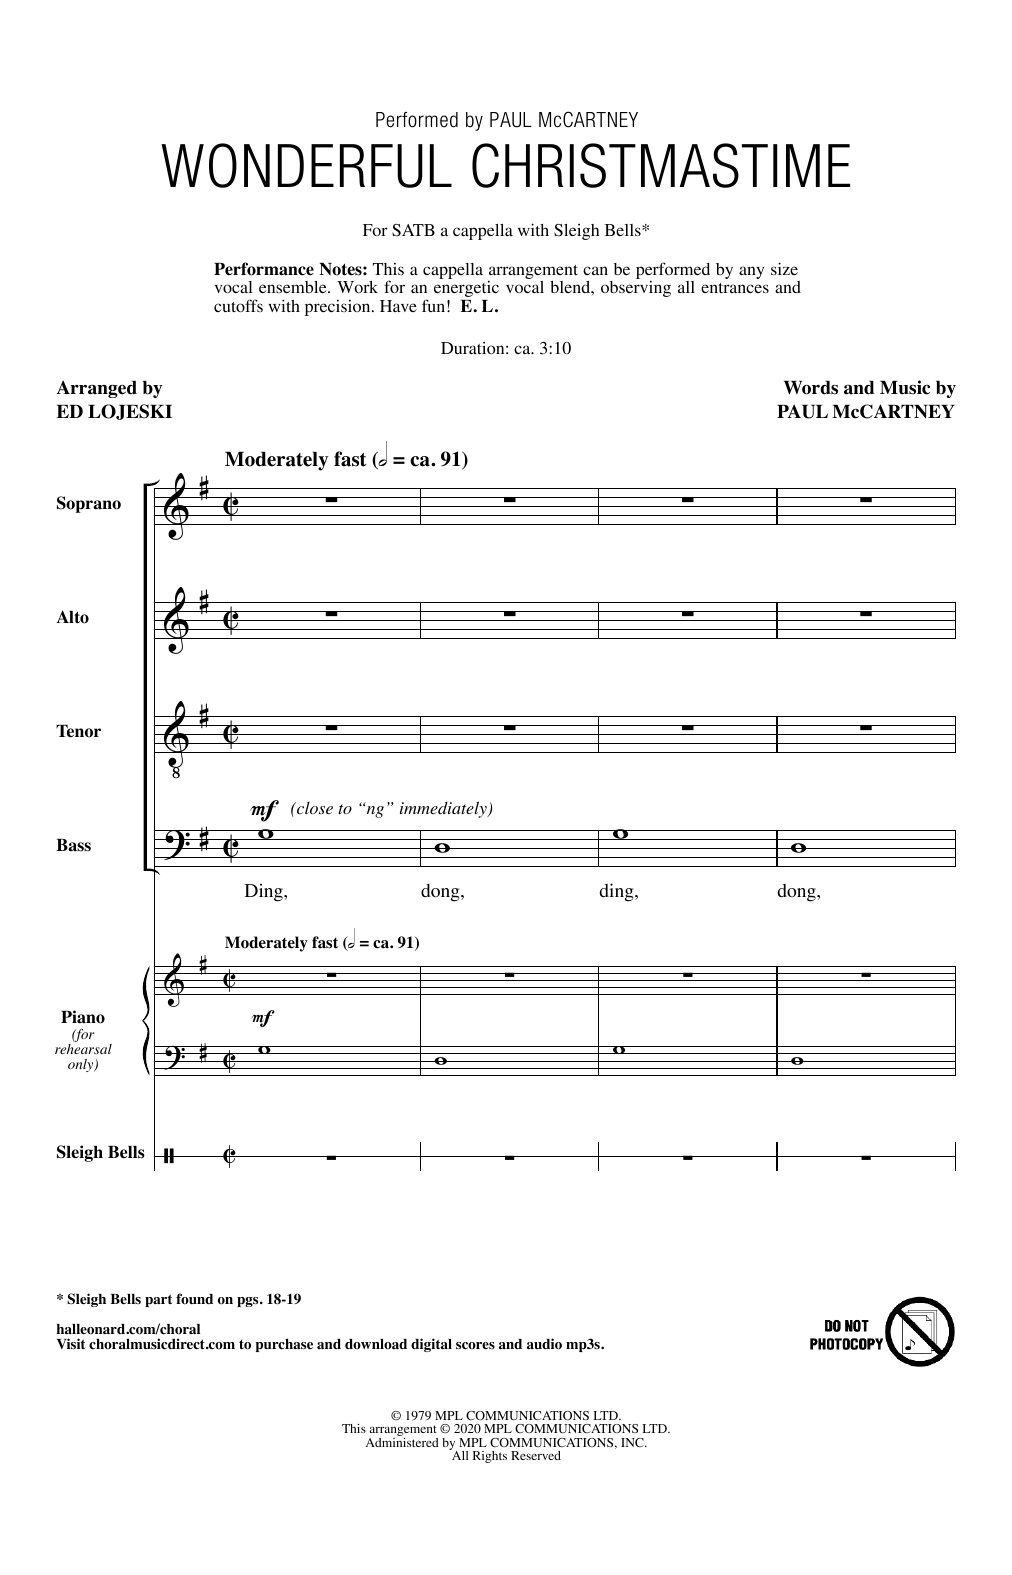 Paul McCartney Wonderful Christmastime (arr. Ed Lojeski) Sheet Music Notes & Chords for SATB Choir - Download or Print PDF